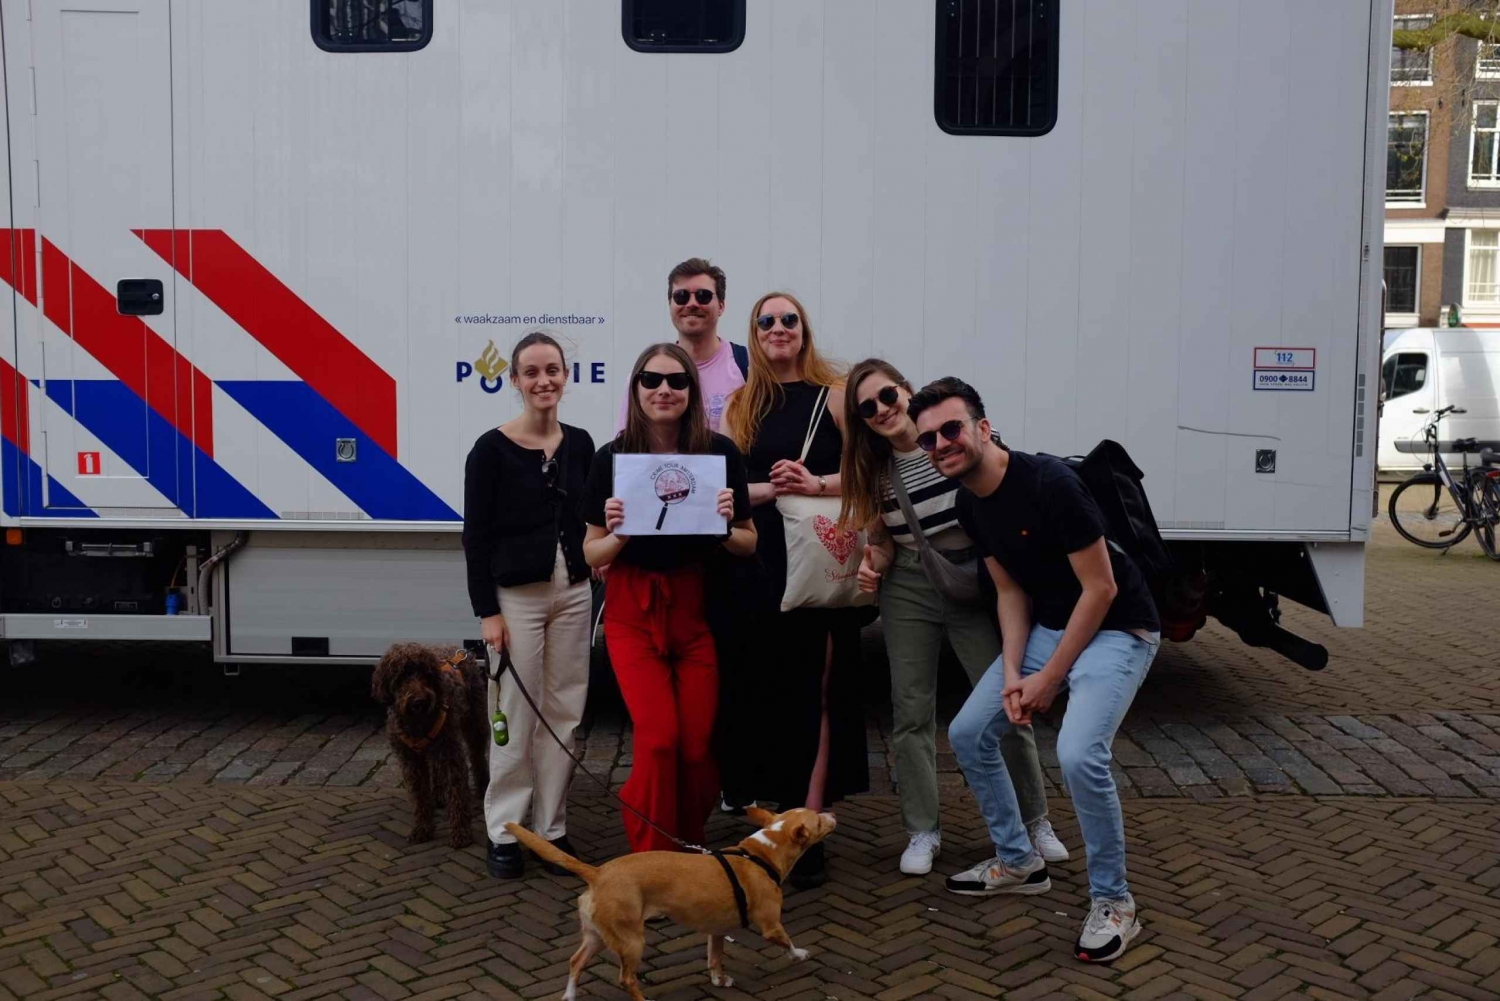 Crime Tour Amsterdam: Poznaj ciemną stronę Amsterdamu